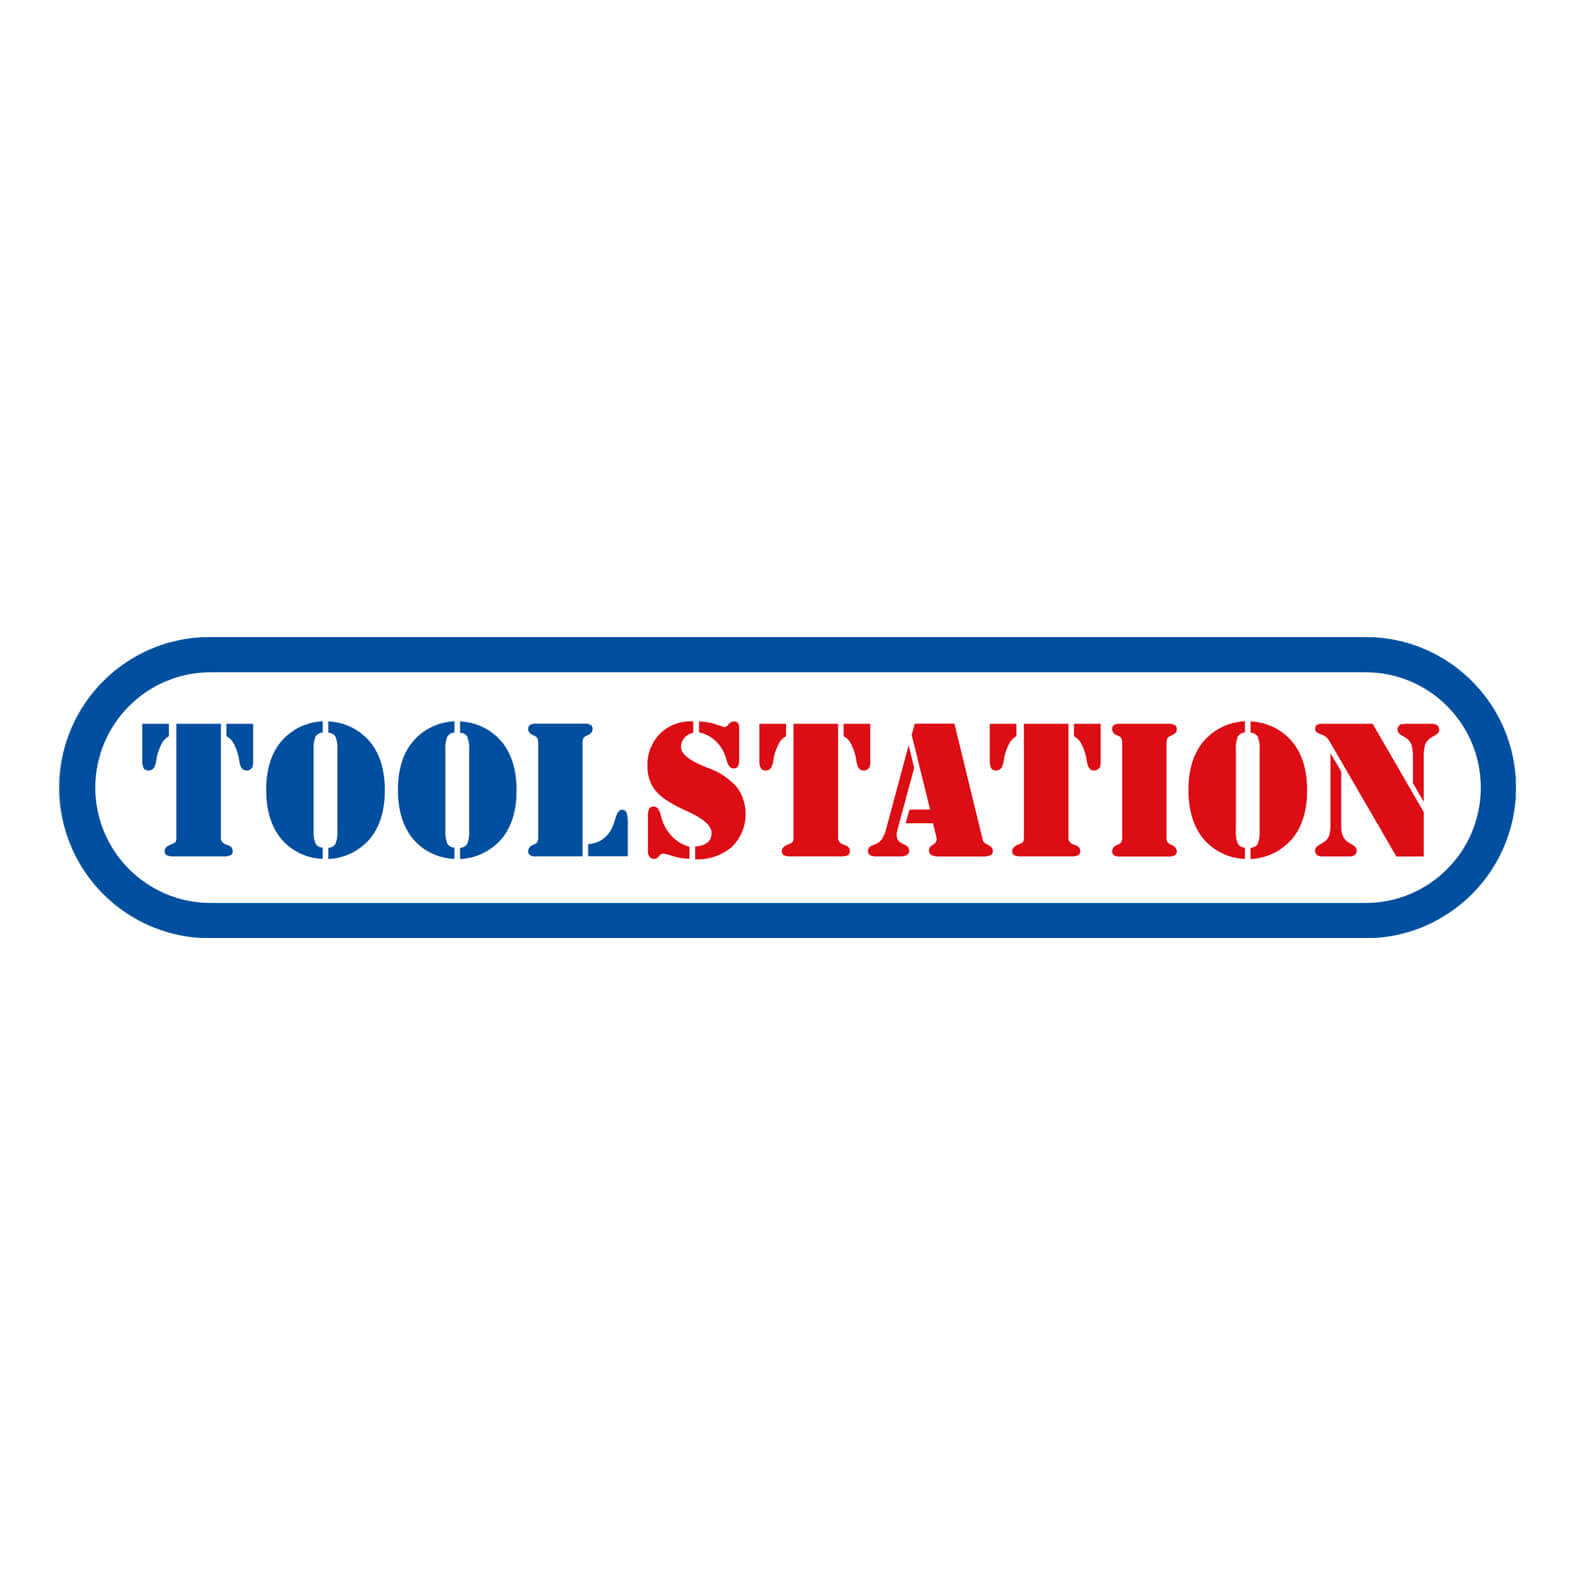 ToolStation